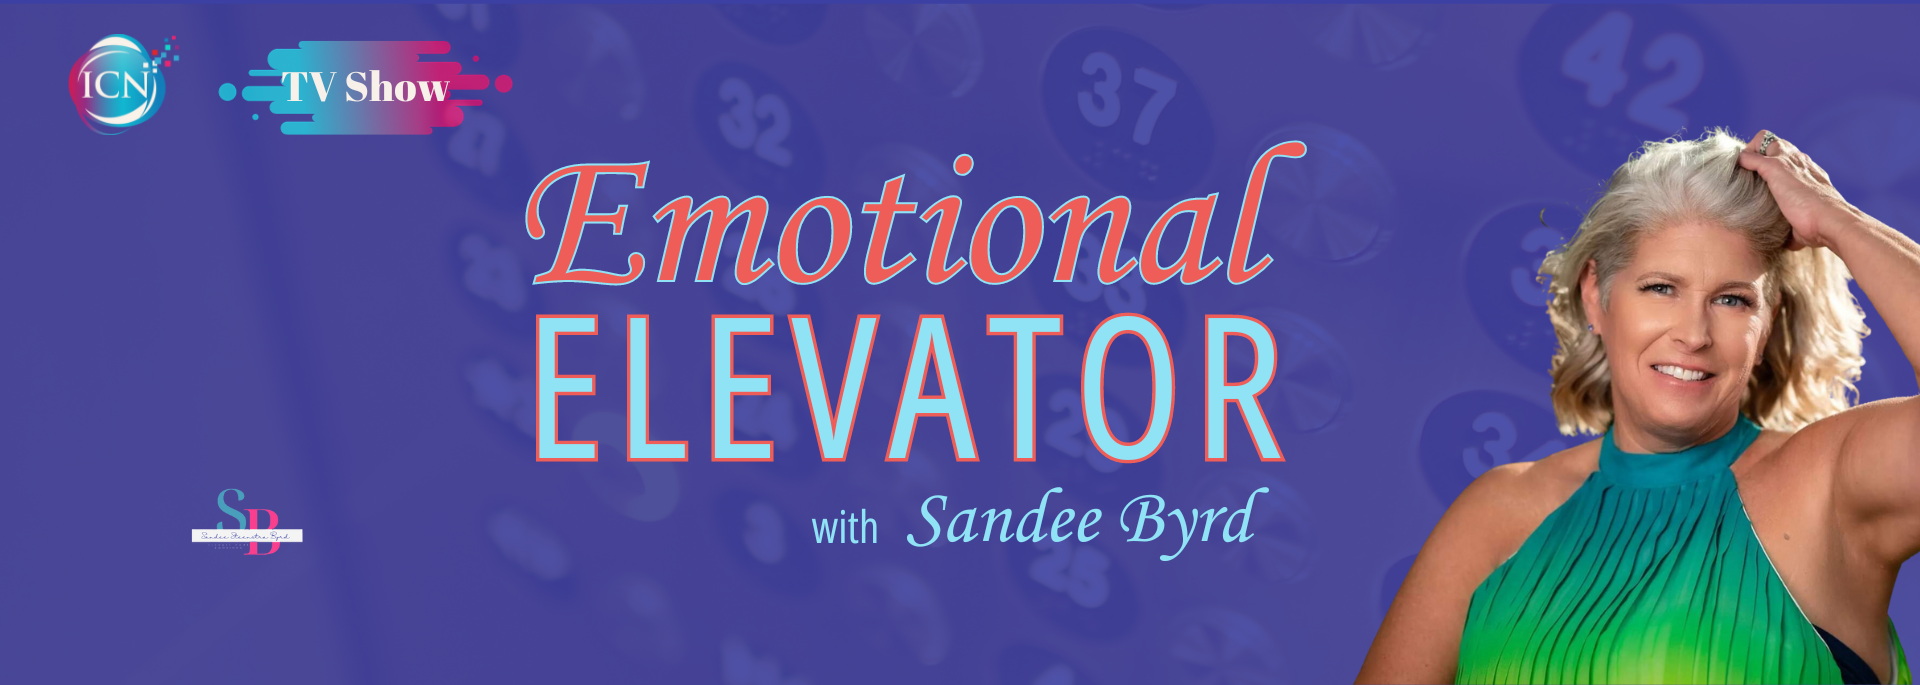 Emotional Elevator with Sandee Bryd